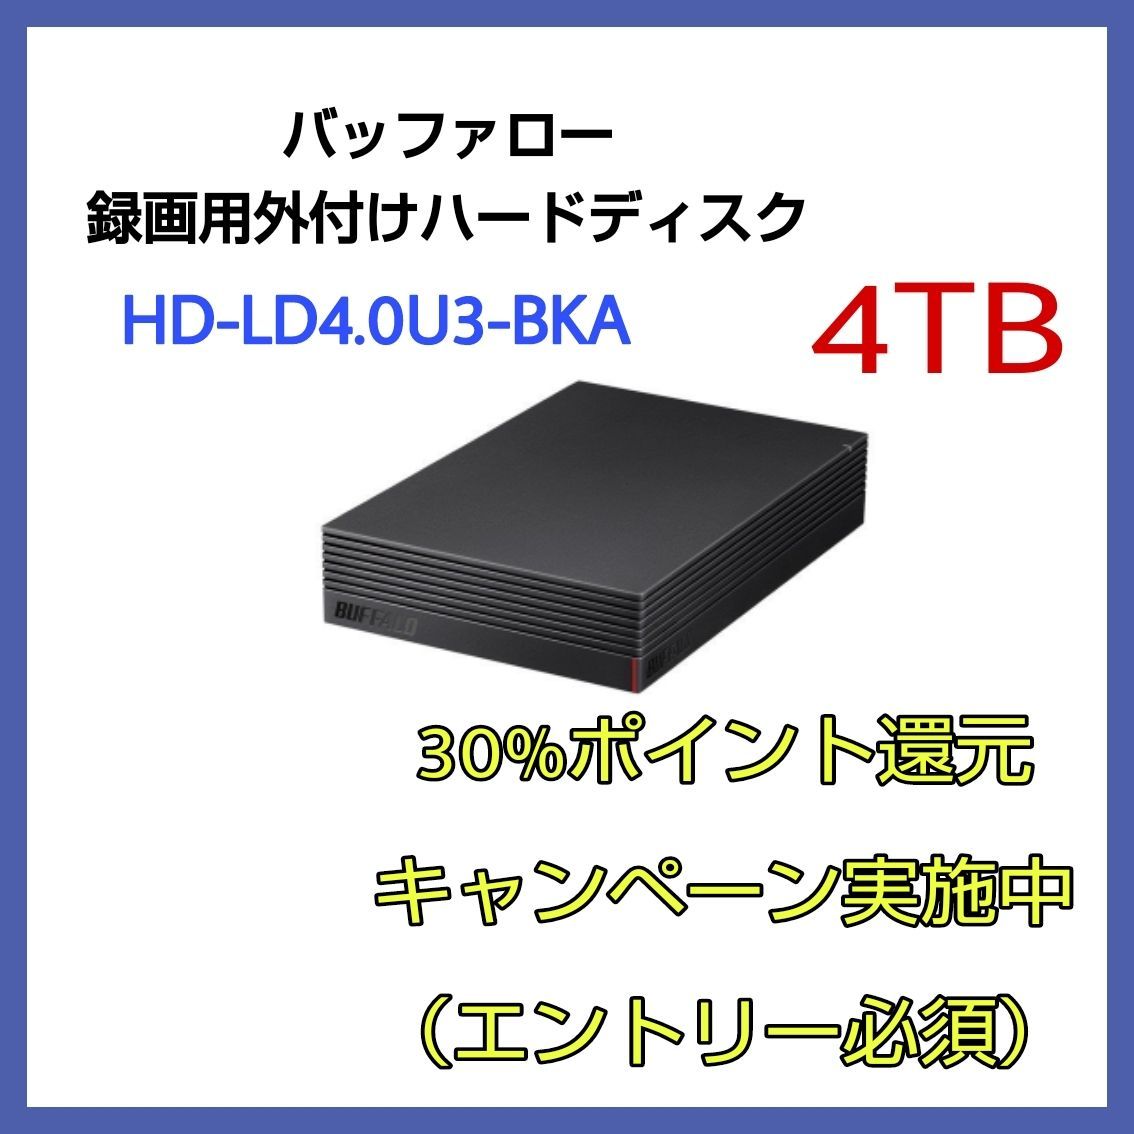 純正直販BUFFALOHD-LD4.0U3-BKA 外付けHDD 4TB PC周辺機器